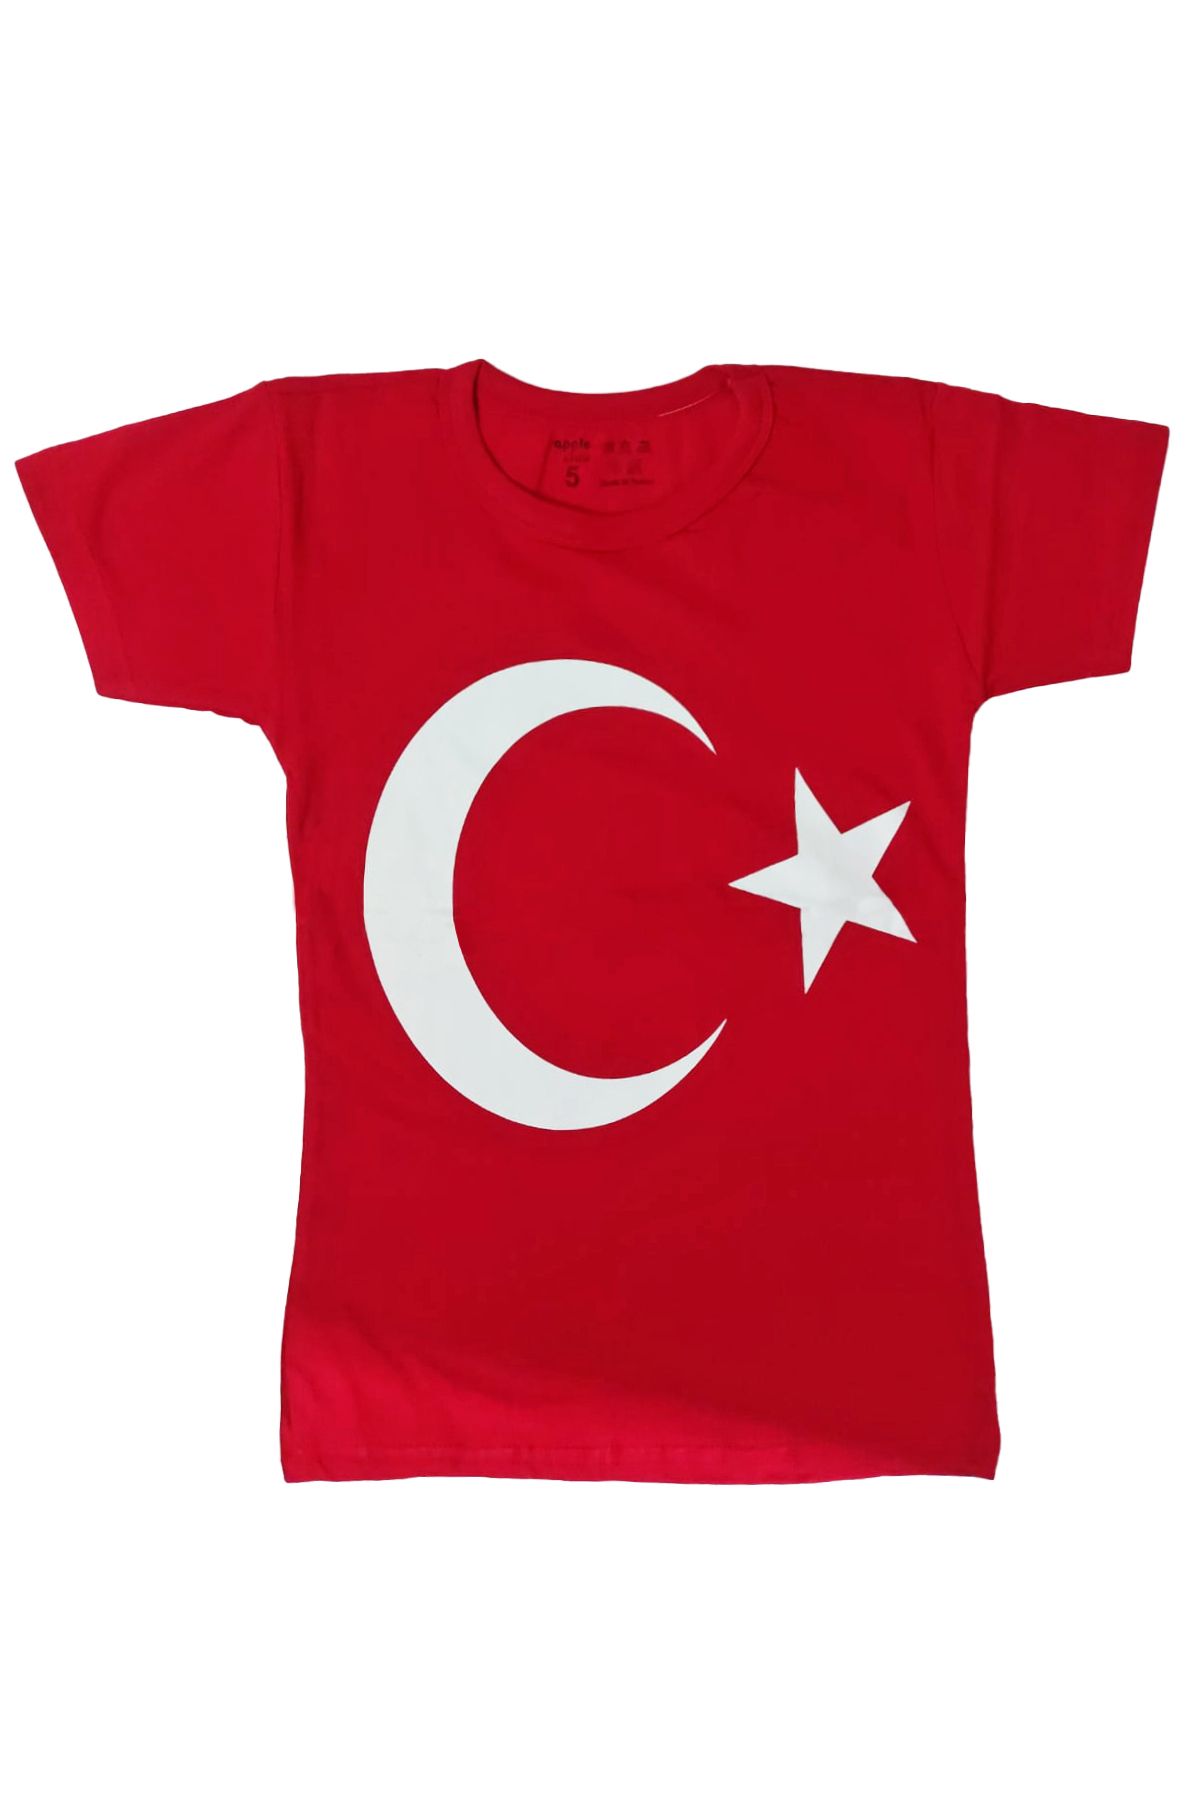 Limmy Türk Bayraklı Tişört Pamuklu Kırmızı Ay Yıldız Çocuk Tshirt- 5 Yaş